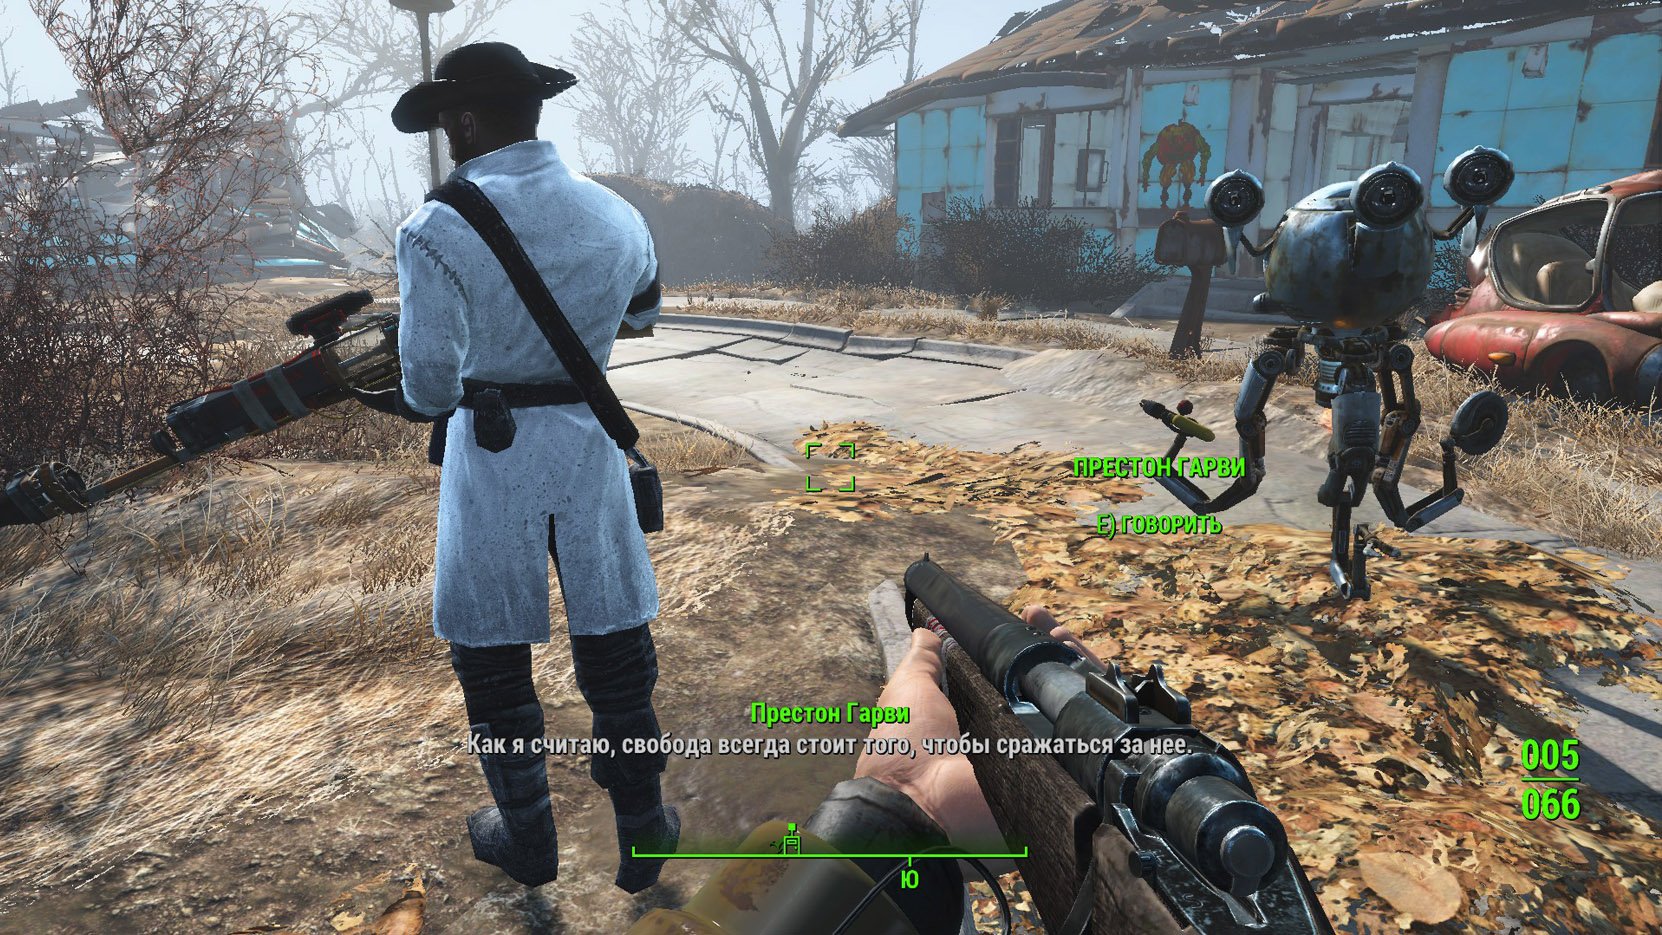 Fallout 4 ядер мир престон гарви фото 37